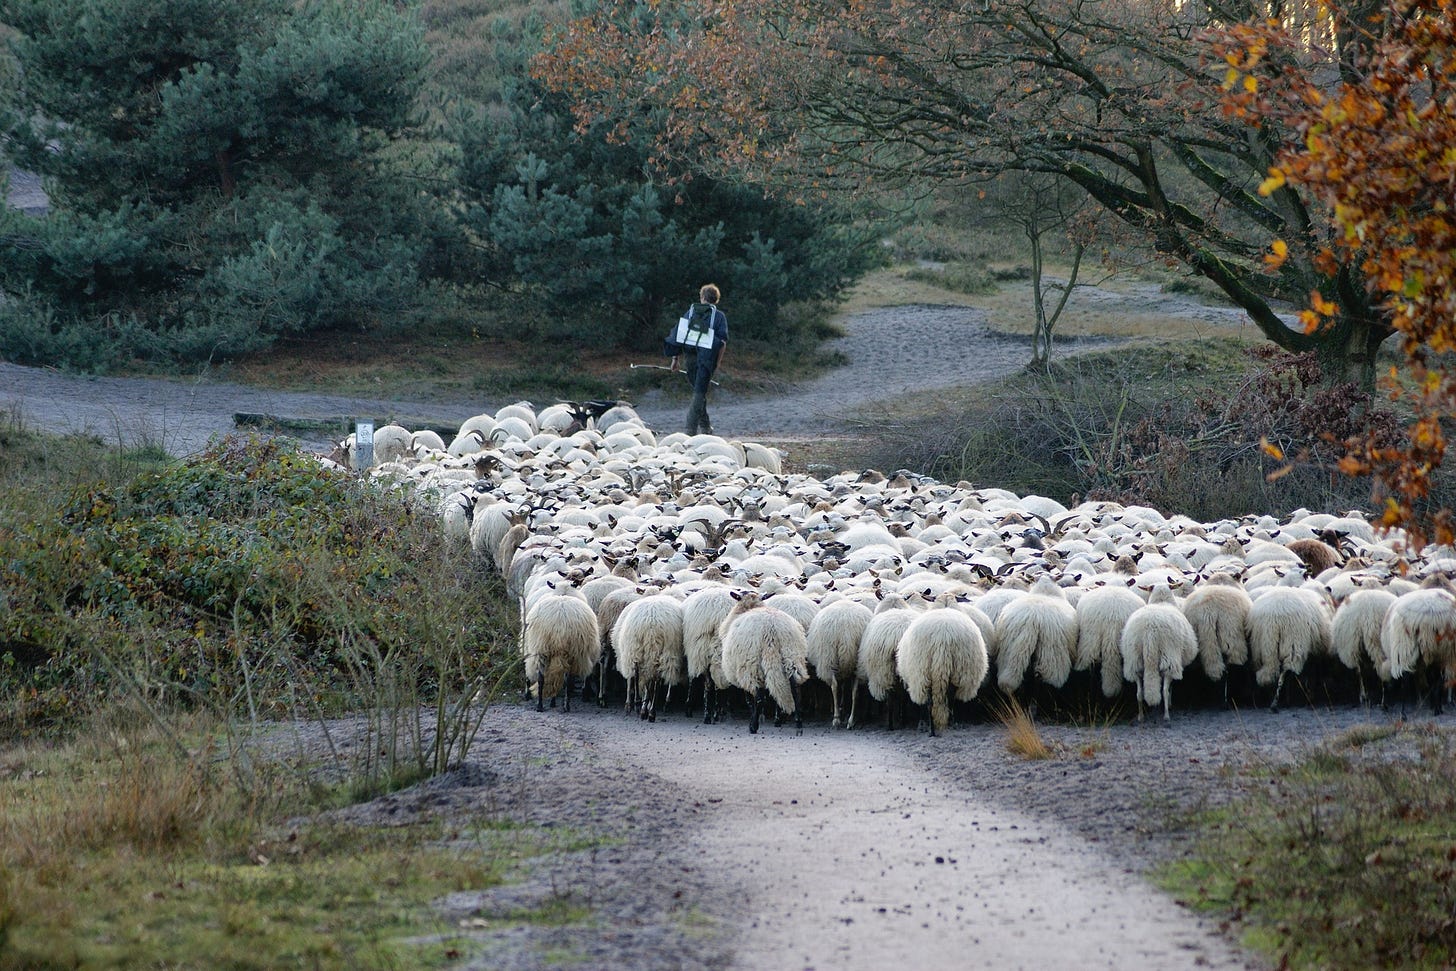 A shepherd leading sheep